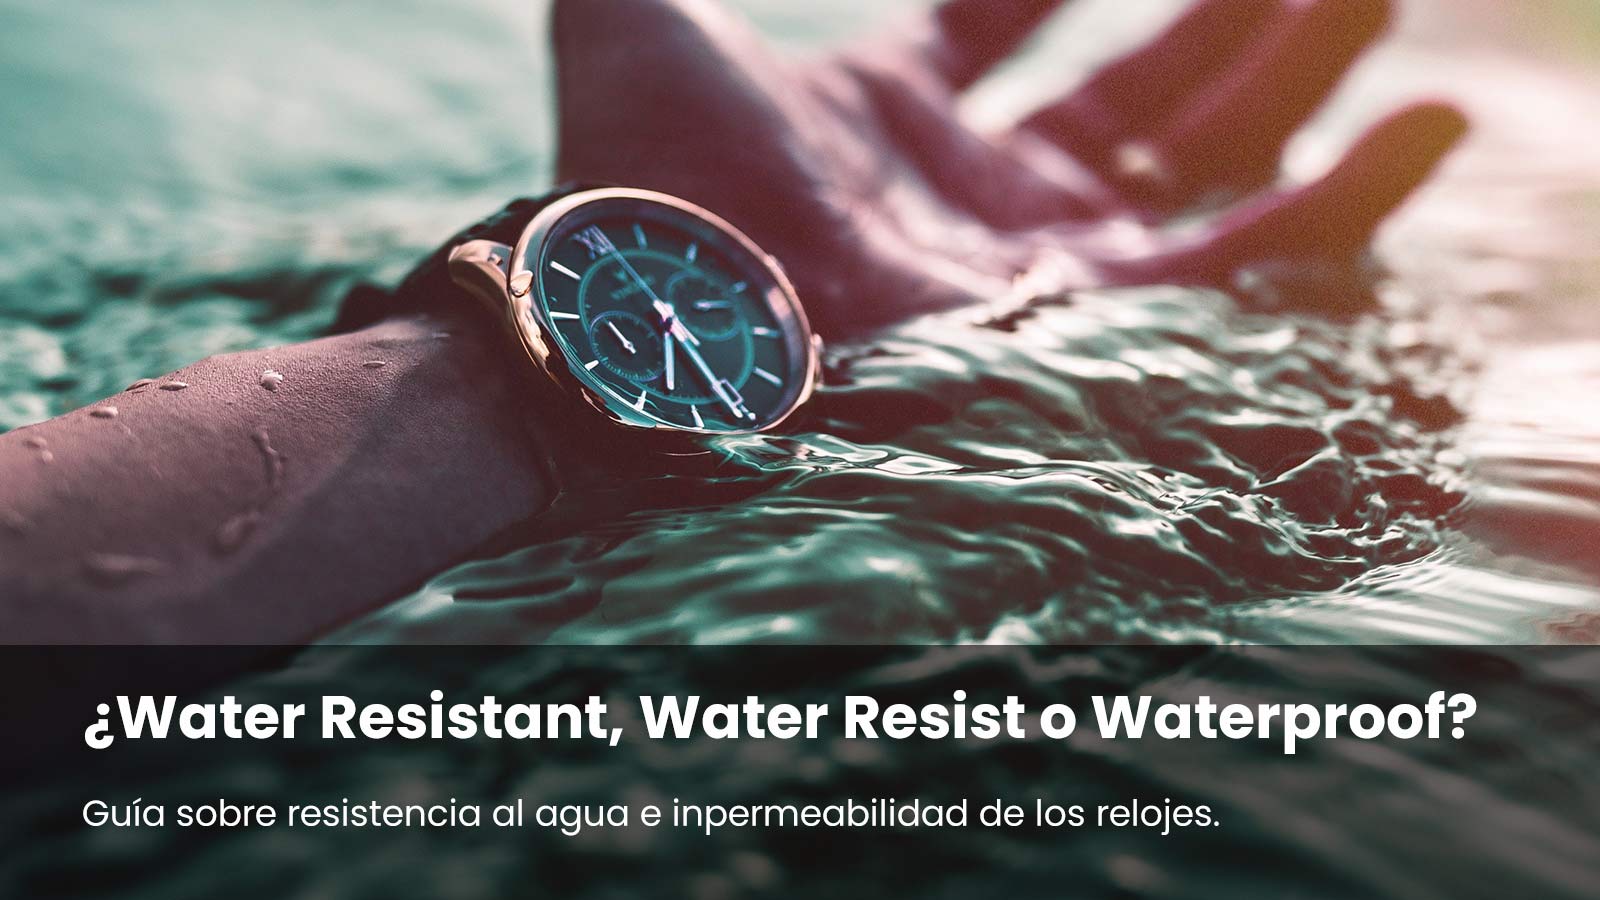 https://relojesaviador.es/blog/wp-content/uploads/2015/02/Water-resistant-water-resist-o-waterproof.jpg